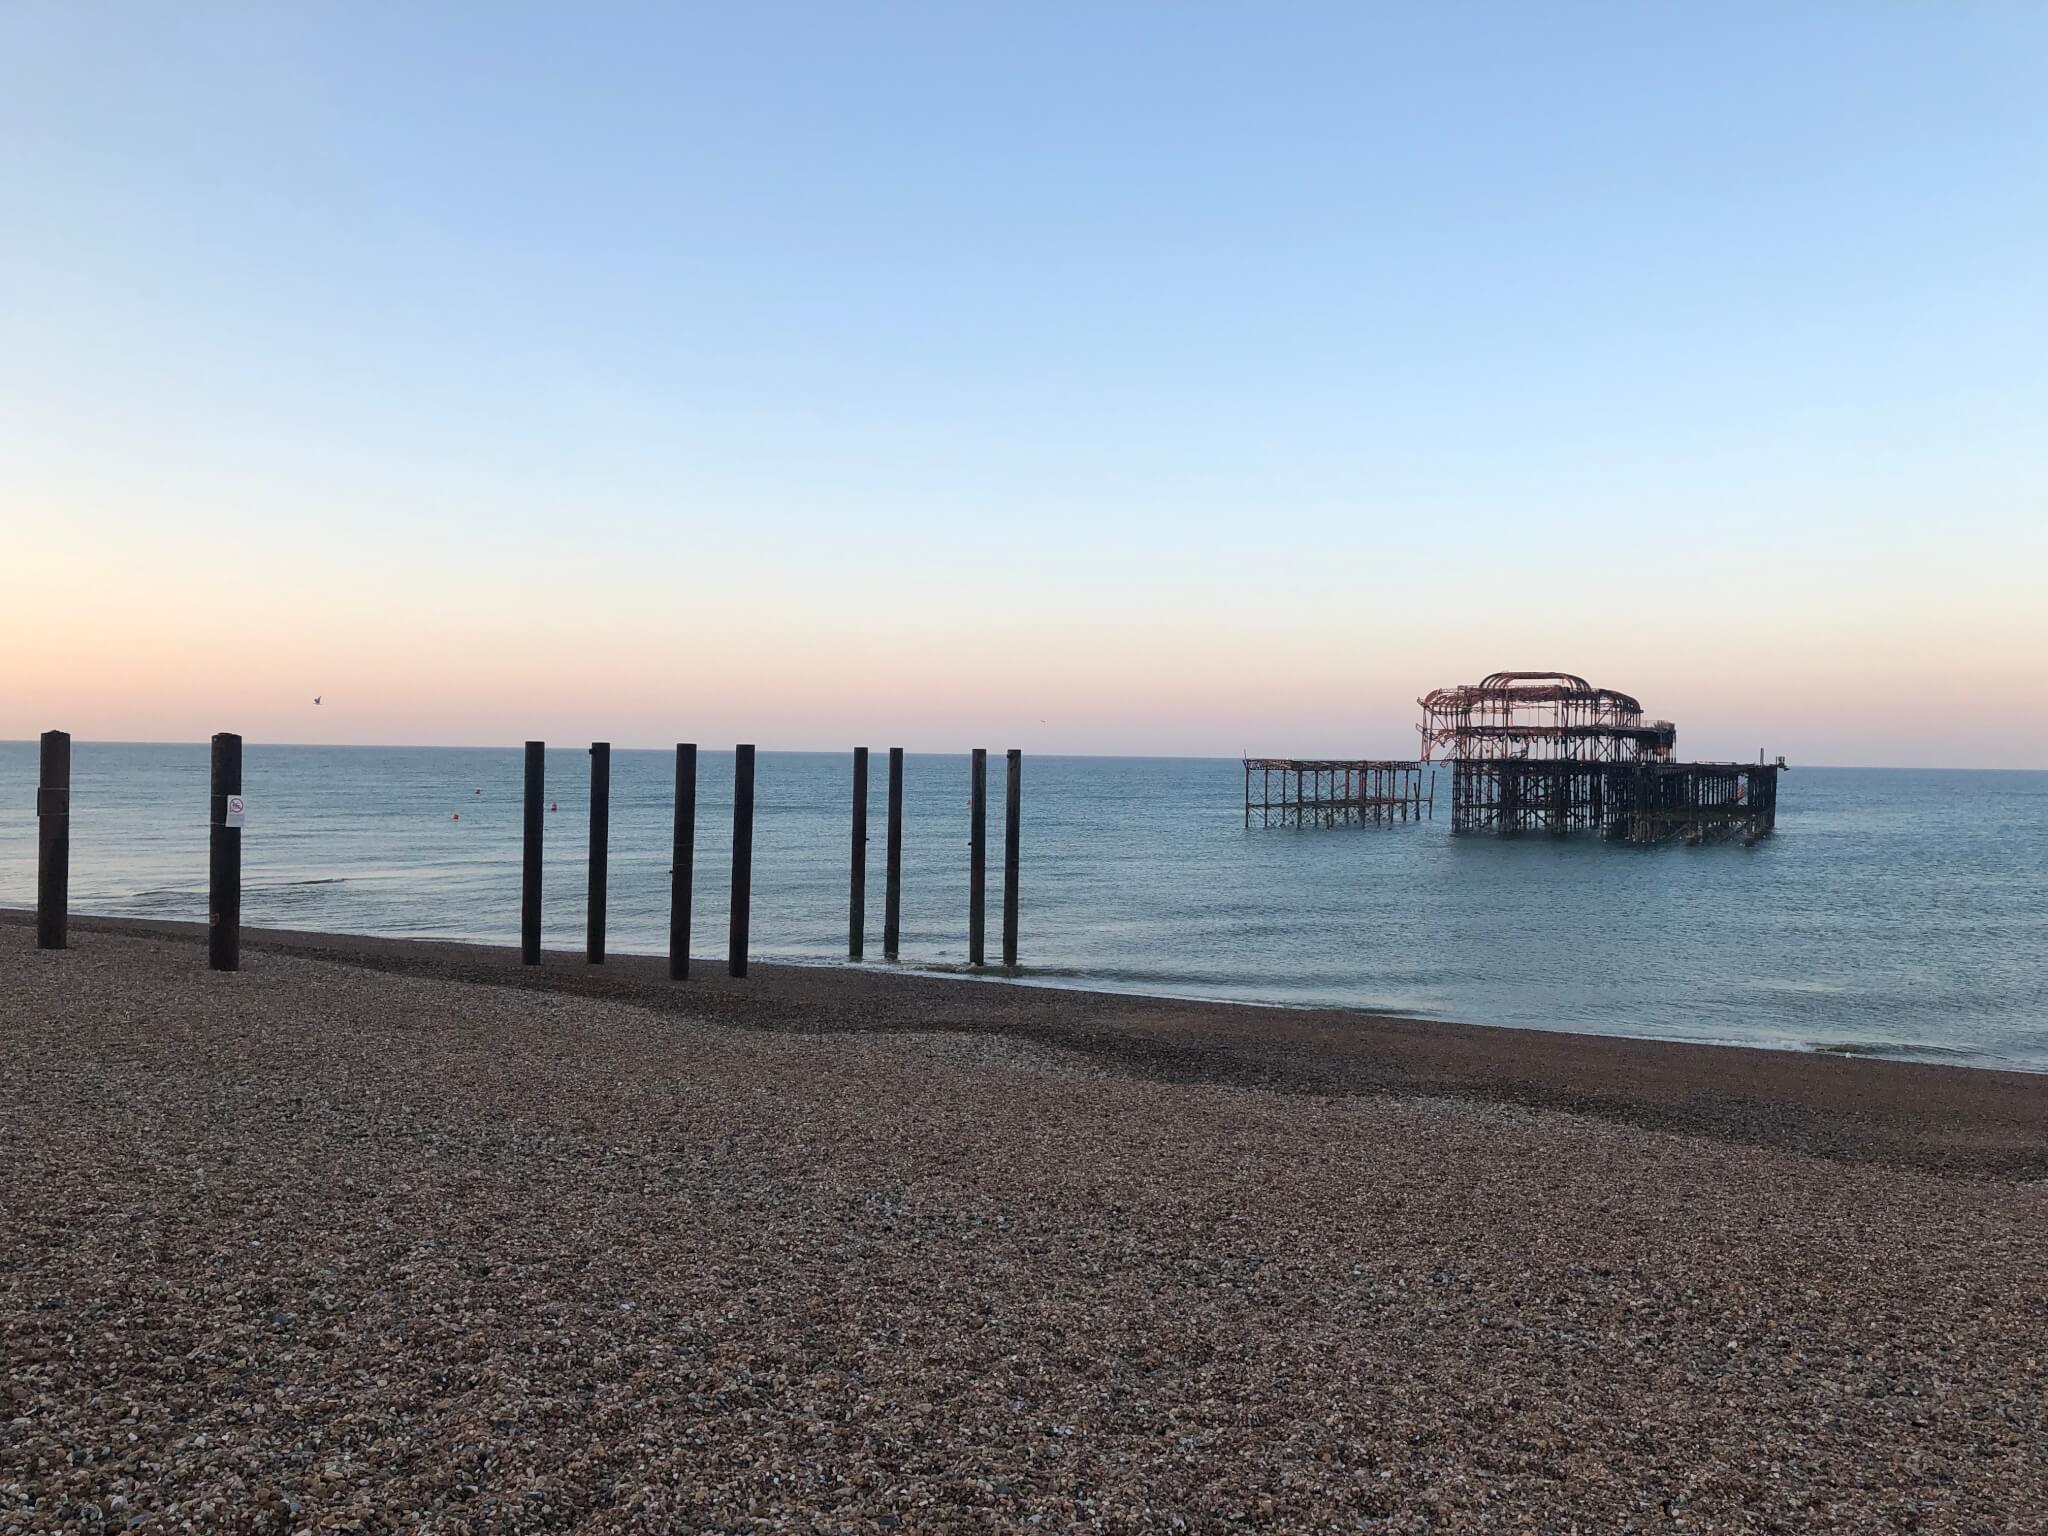 West Pier / Ruin at the sea, Brighton, England ⋆ The Passenger